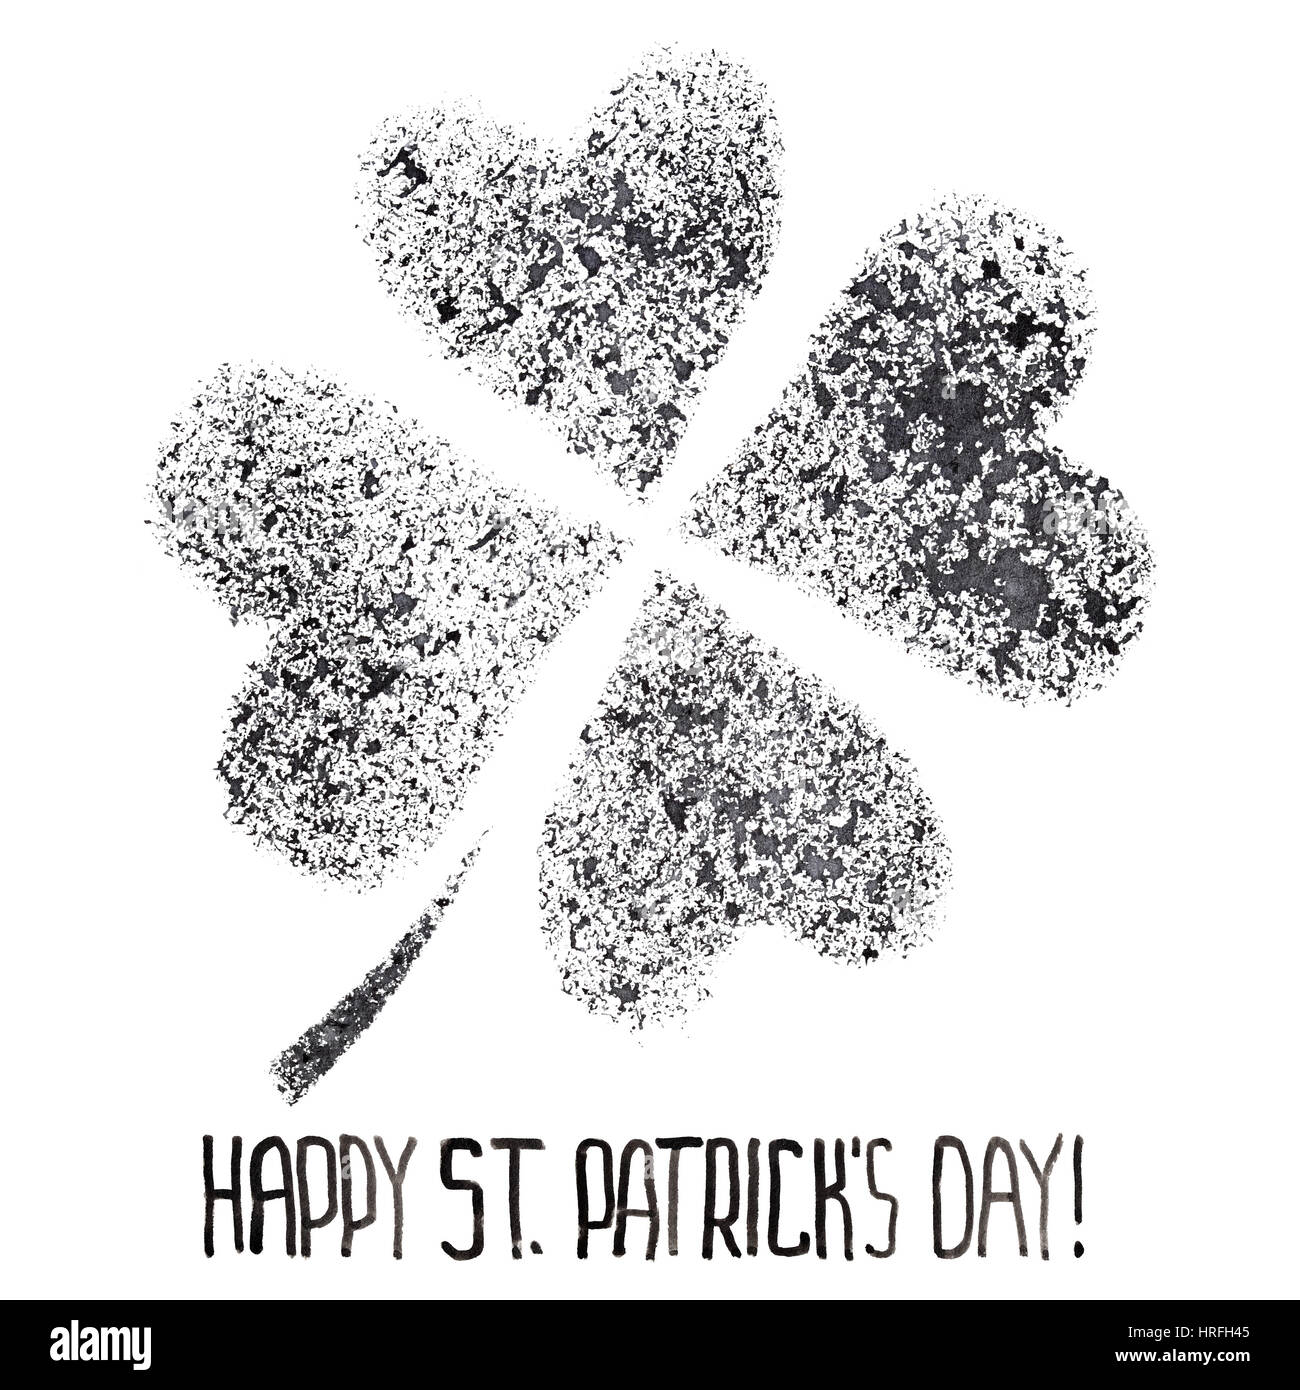 Shamrock - stenciled four leaf Irish clover - graffiti style raster illustration Stock Photo